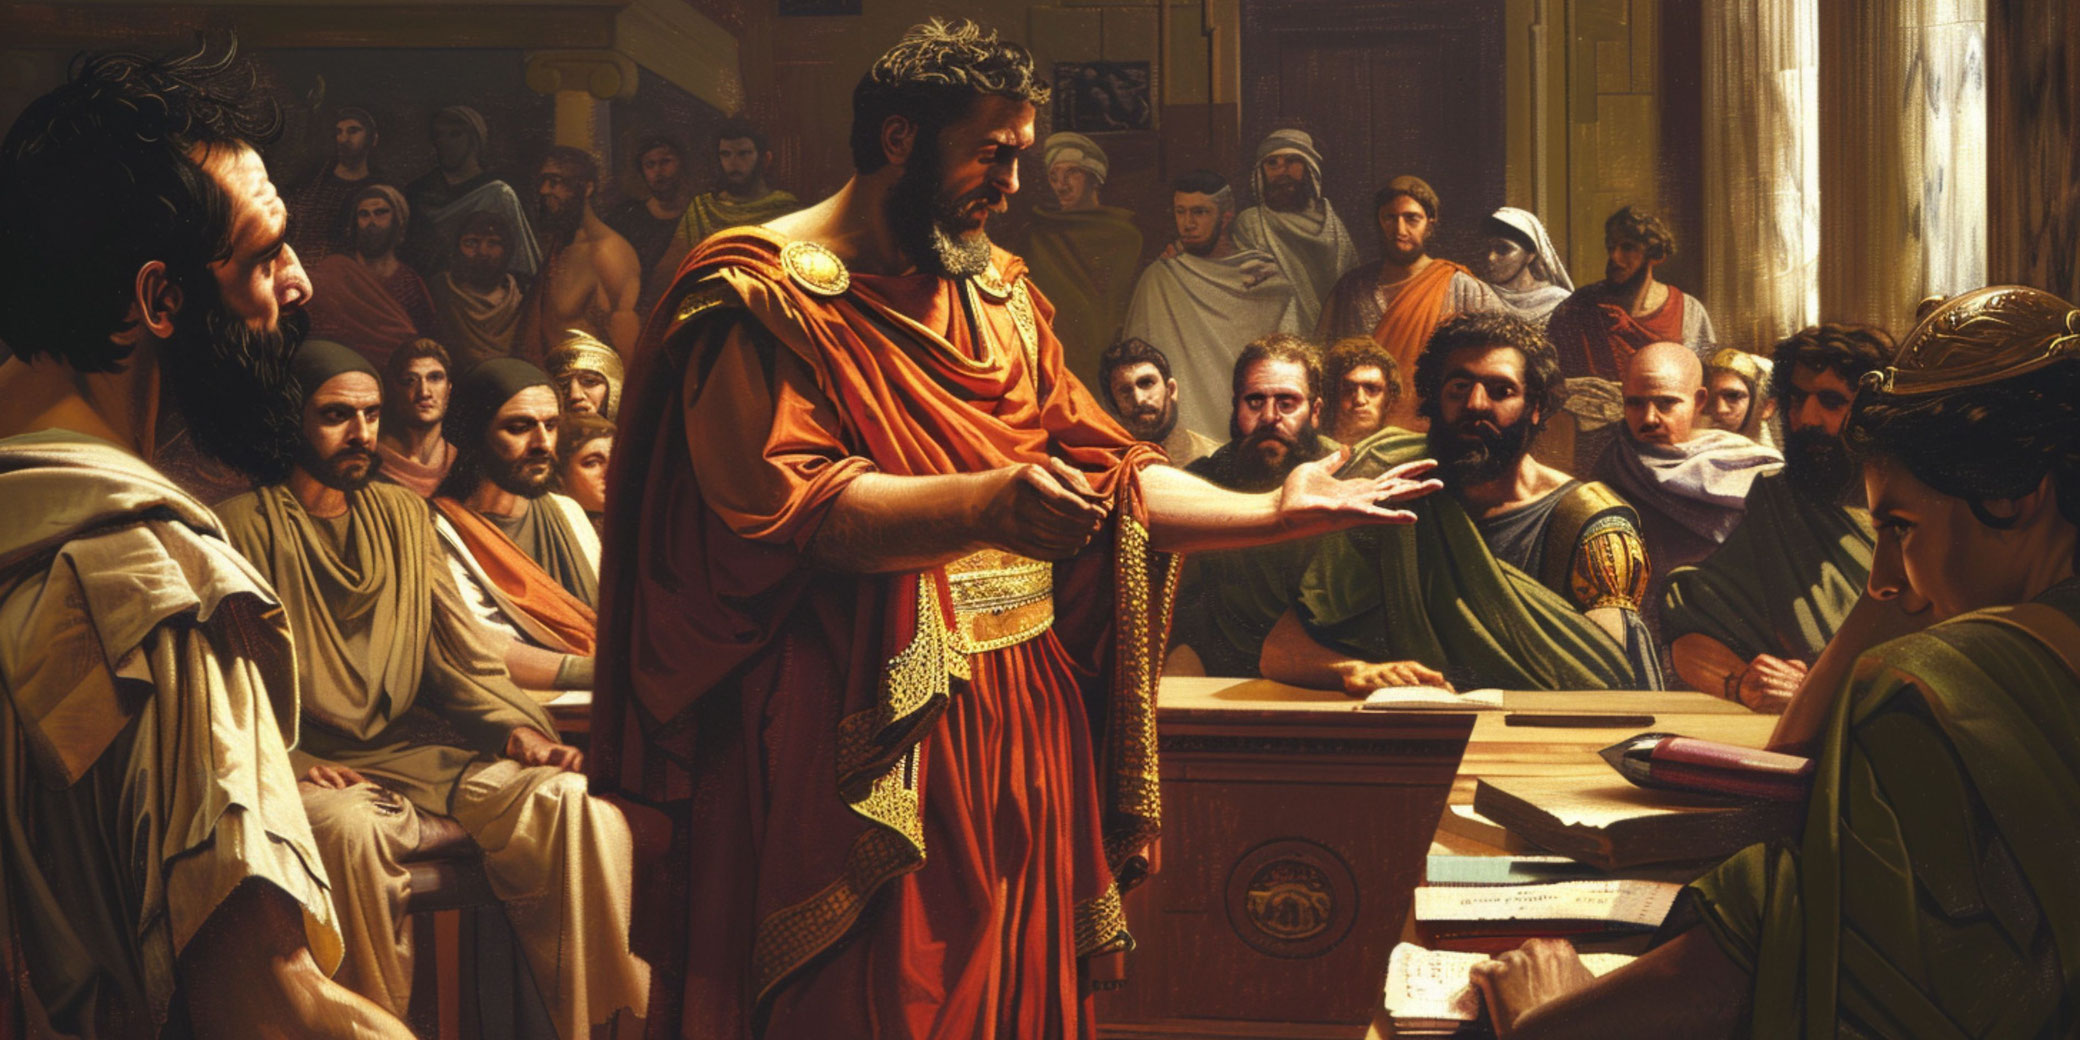 Demosthenes' bitter struggle to destroy Alexander the Great’s father